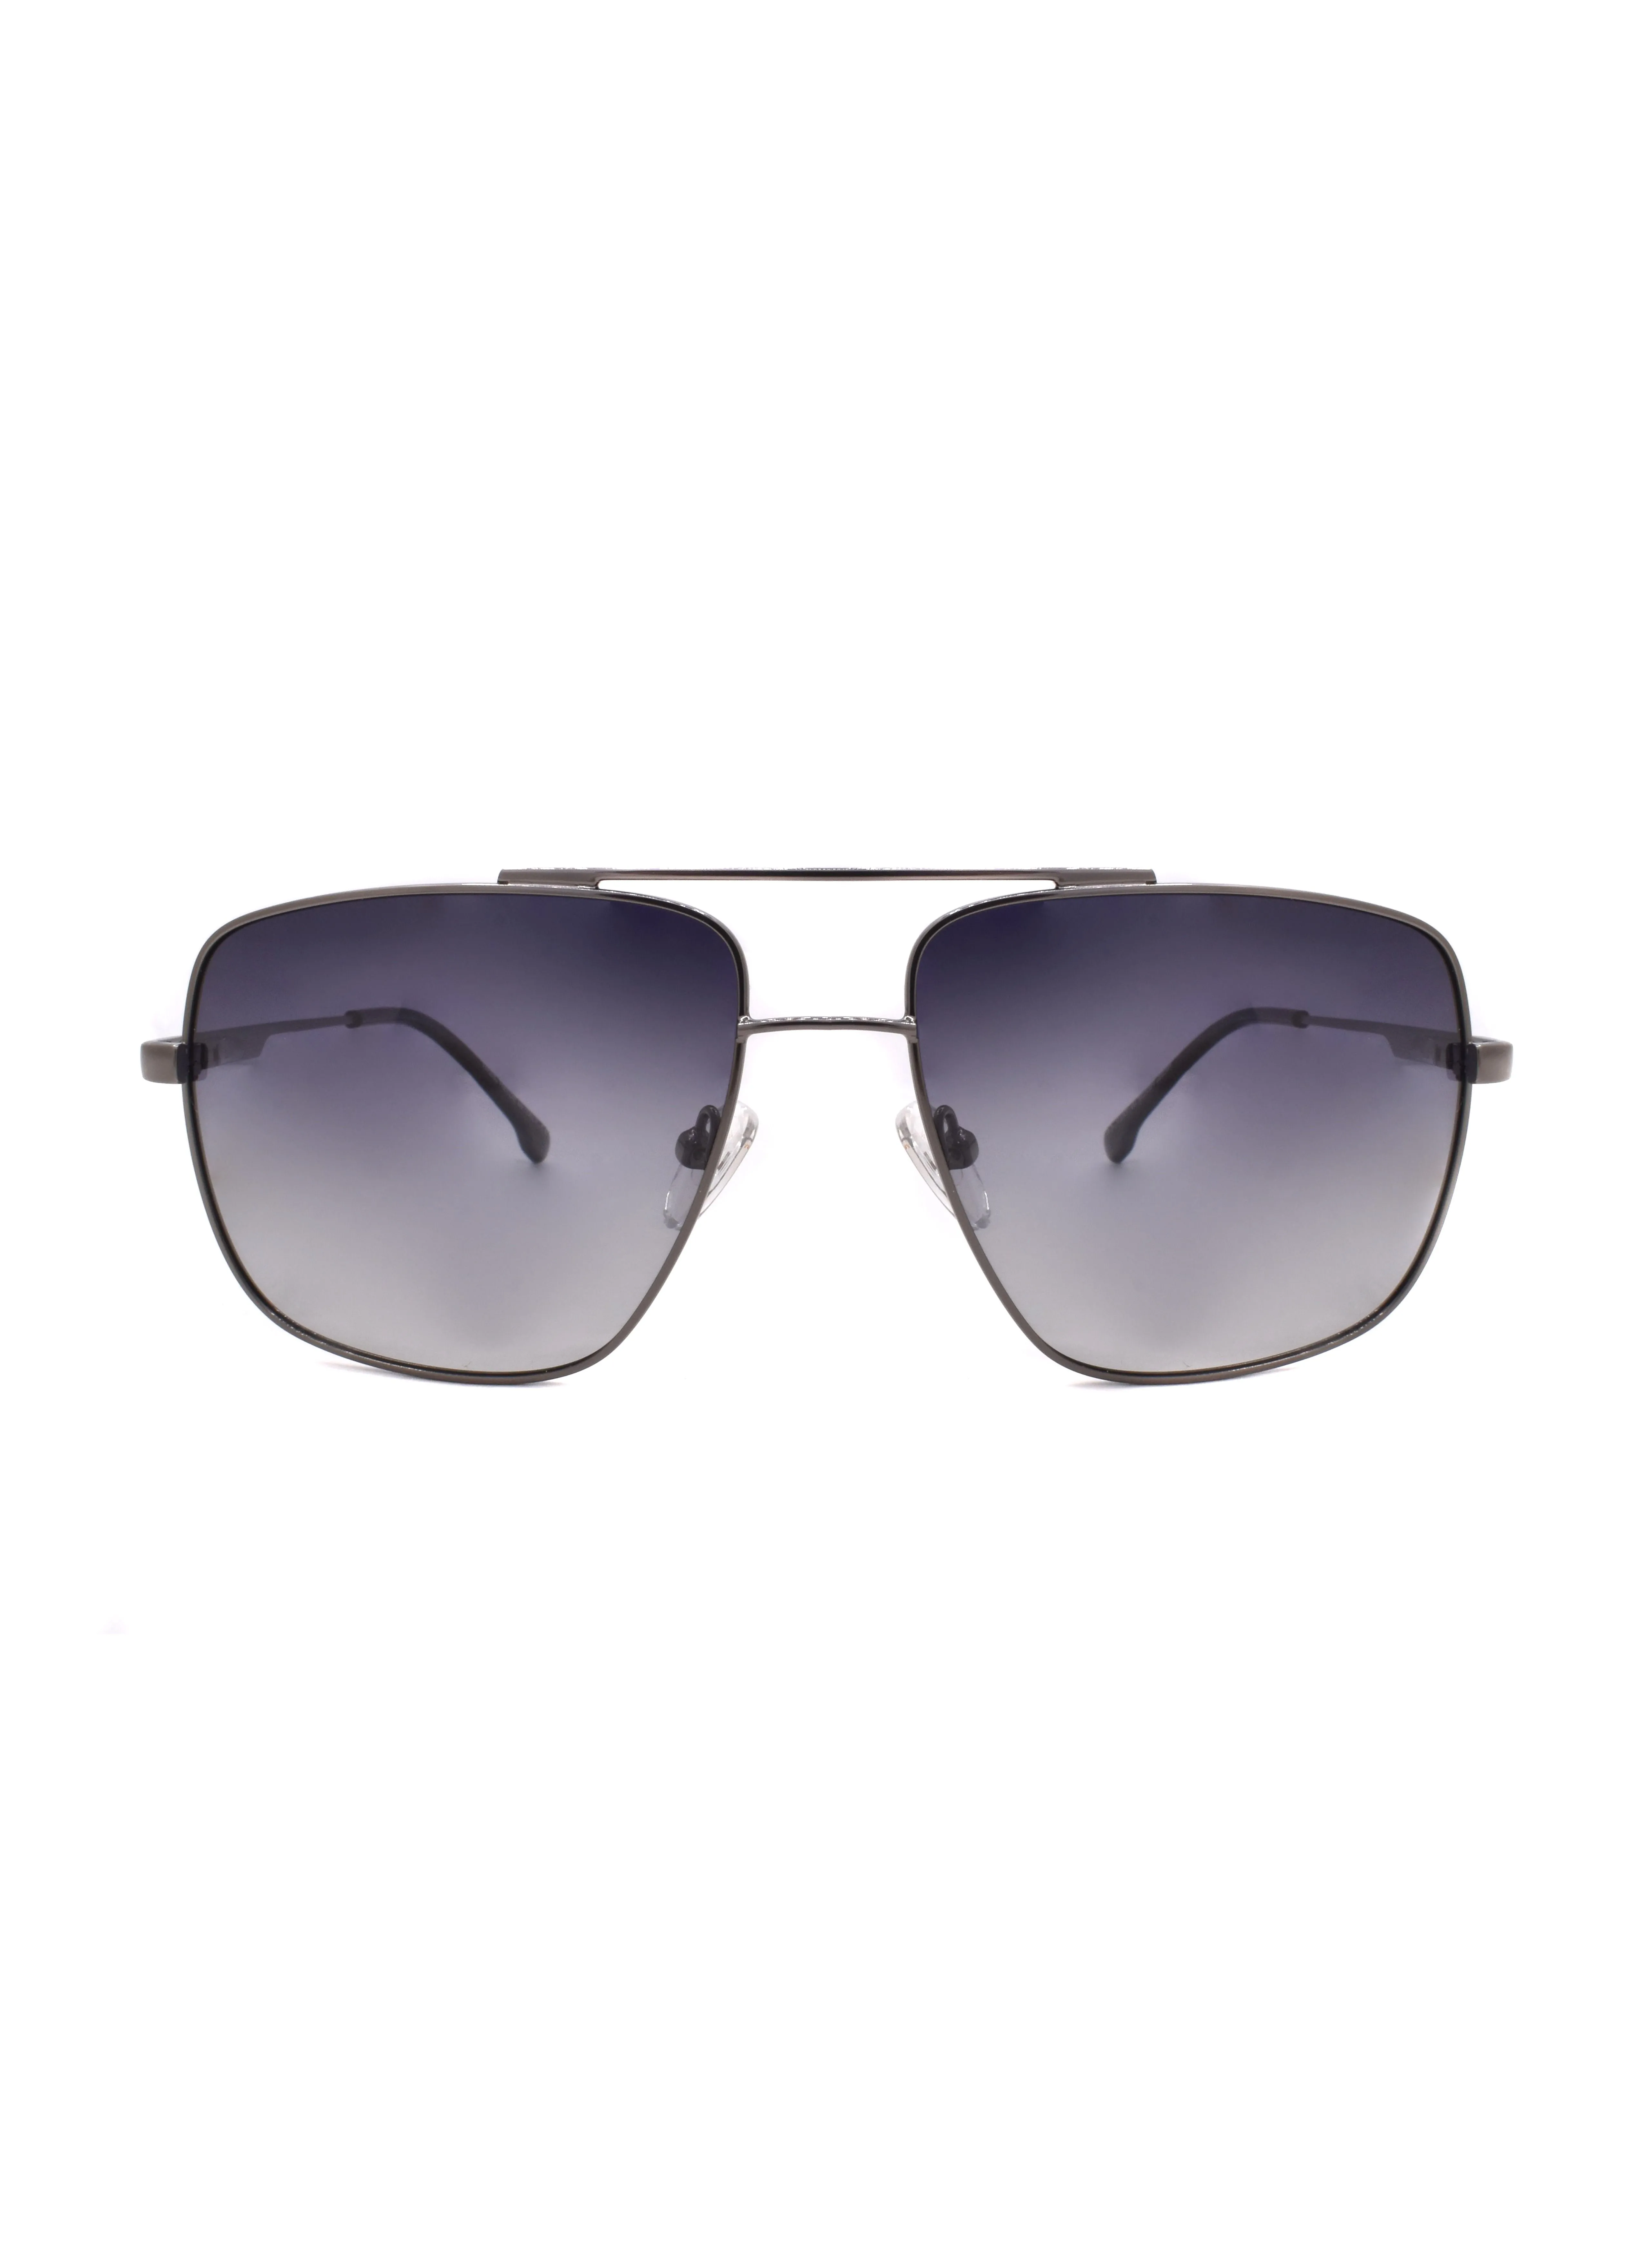 MEC Square/Aviator Shape Sunglasses 39979-C4